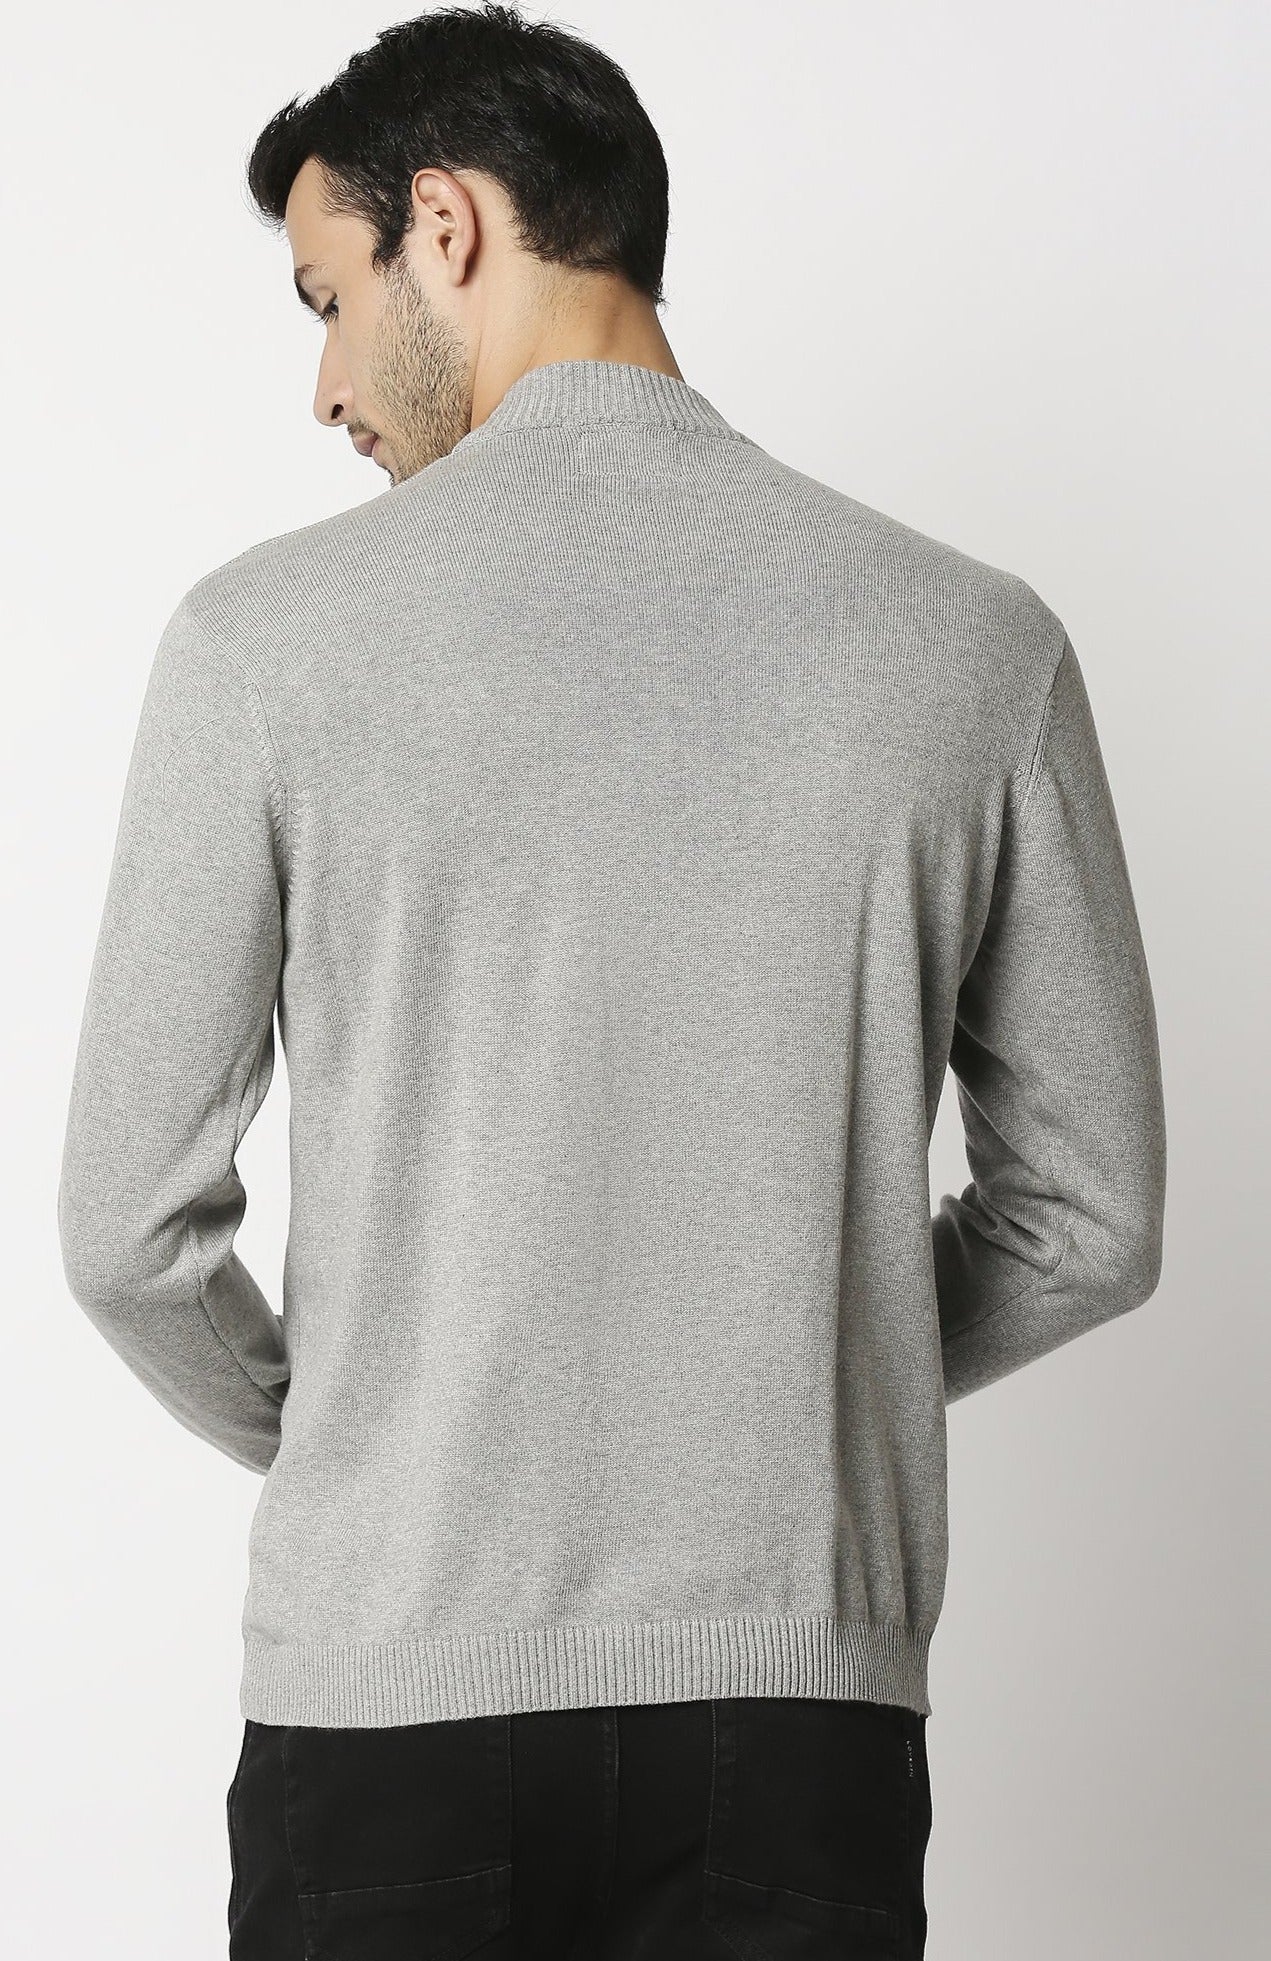 Fostino Tango Grey Turtle Neck T-Shirt - Fostino - T-Shirts